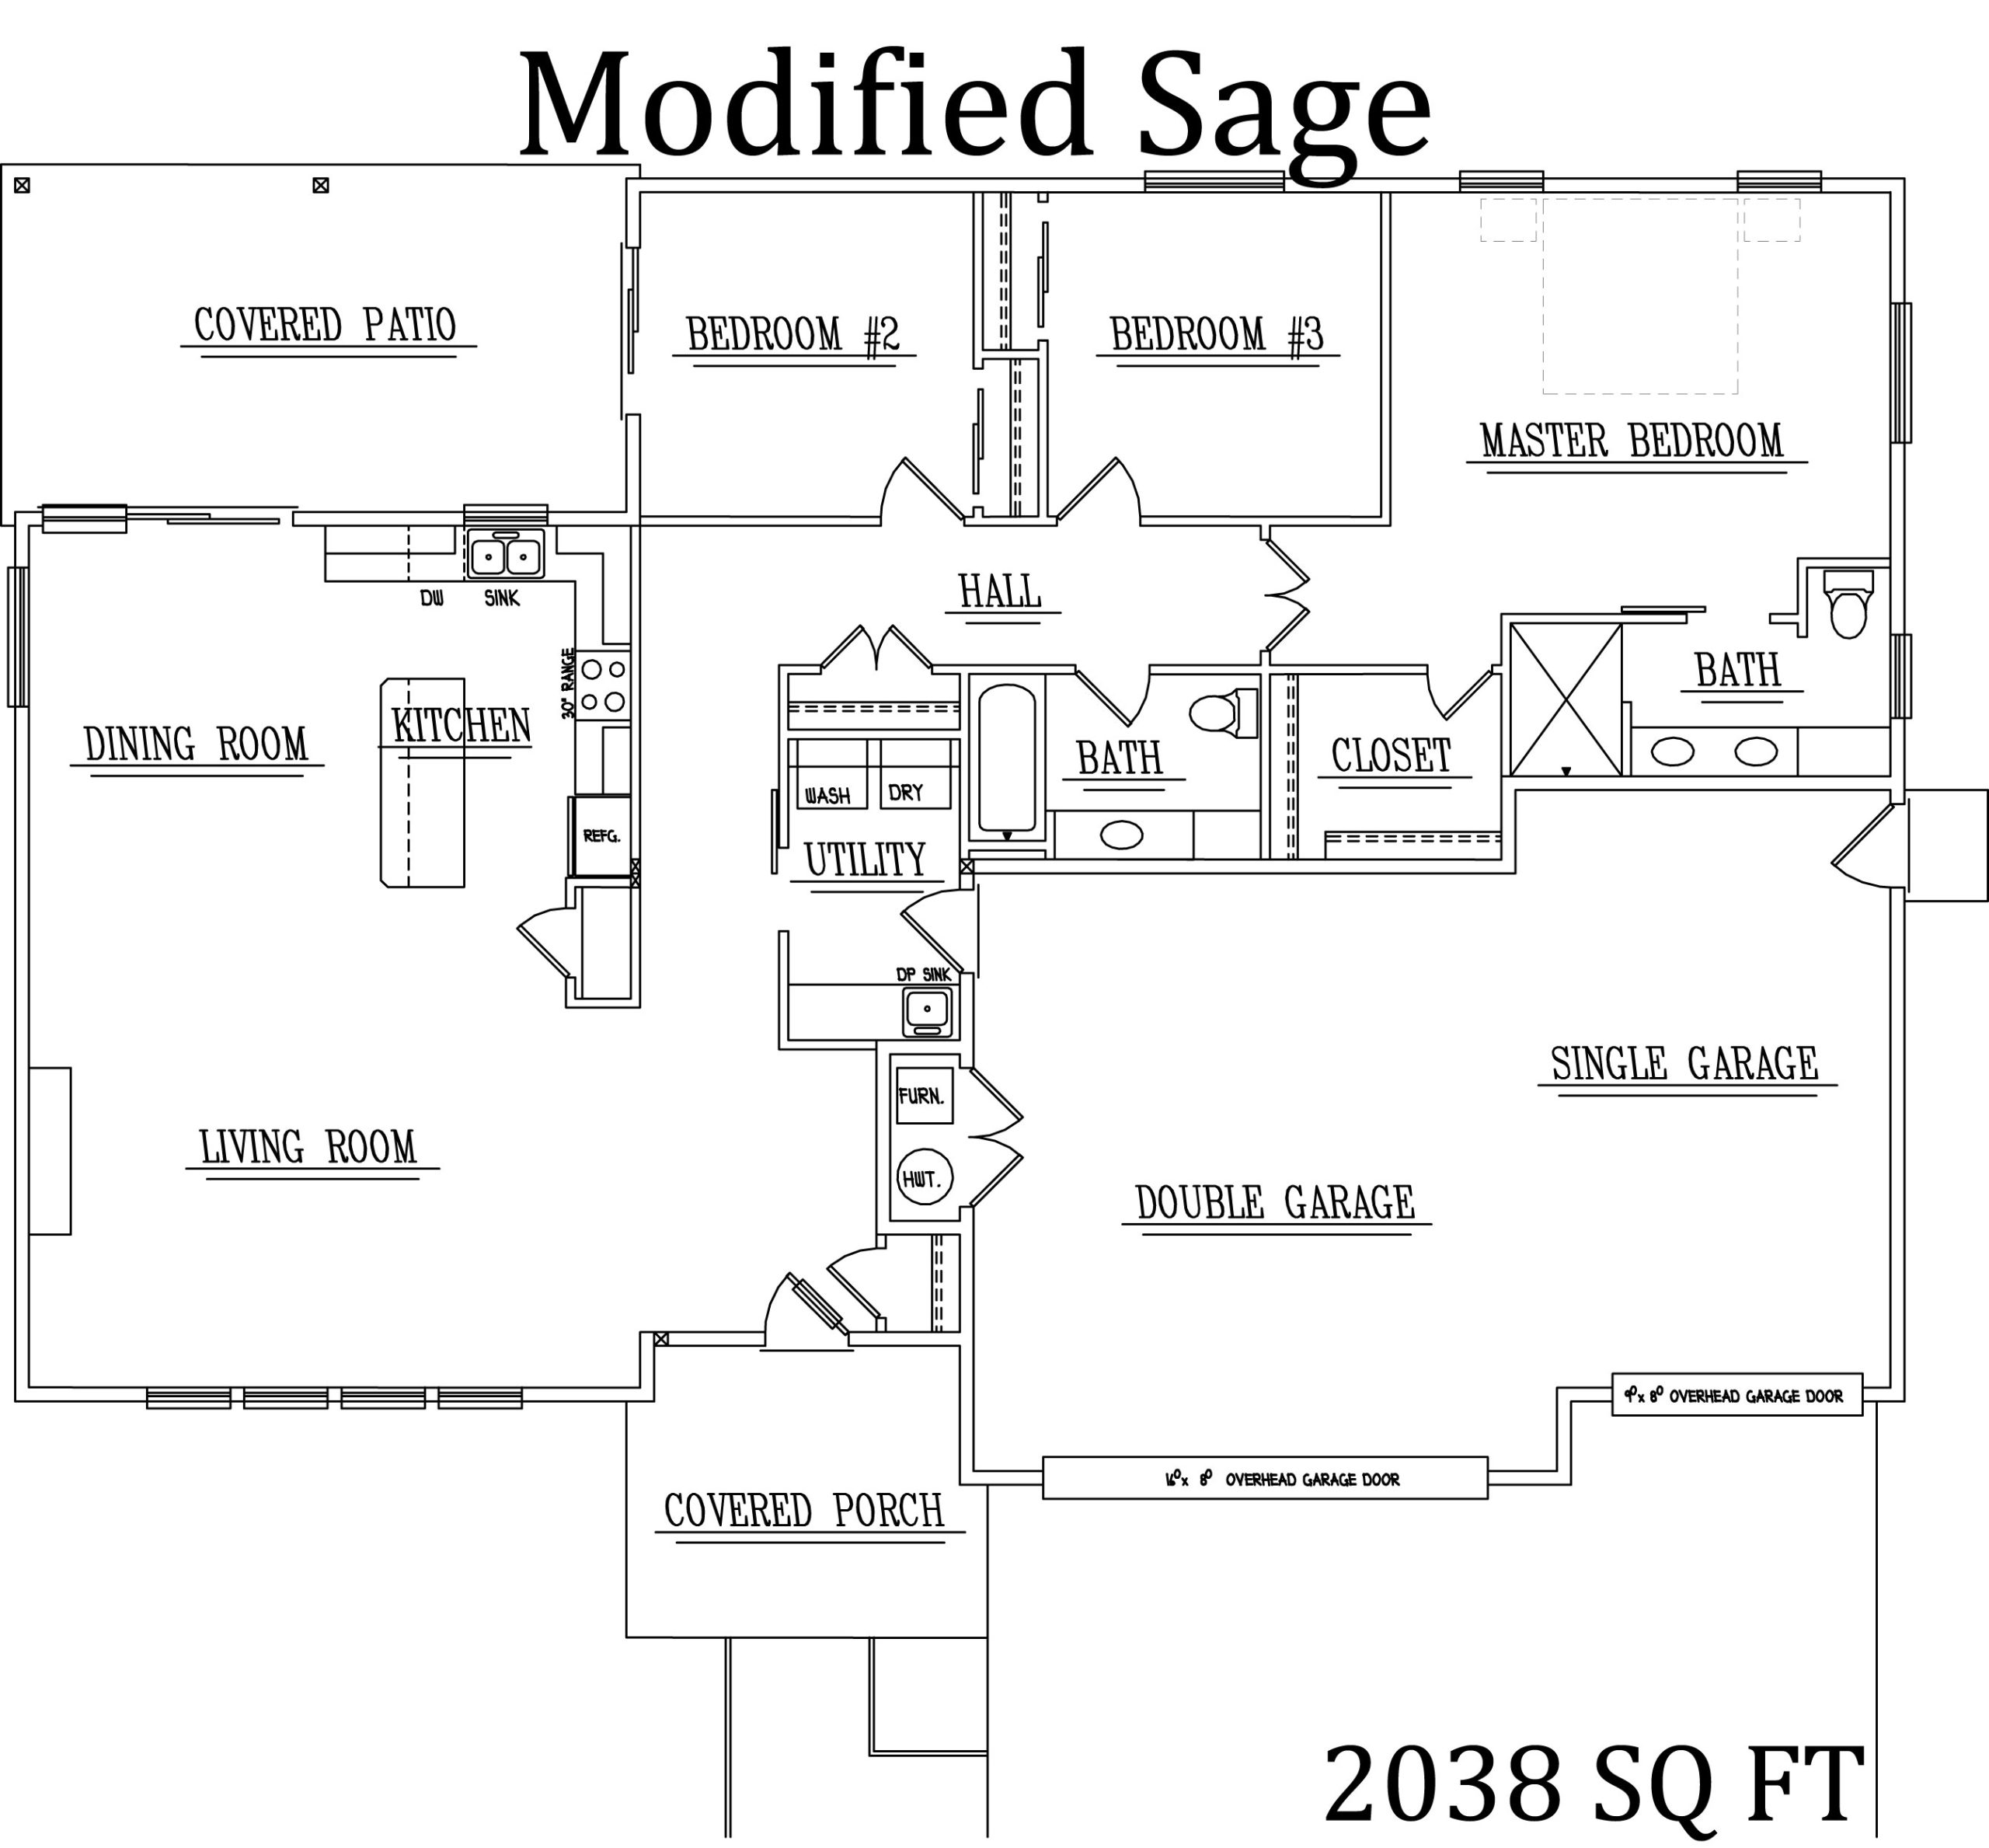 Modified Sage Floorplan